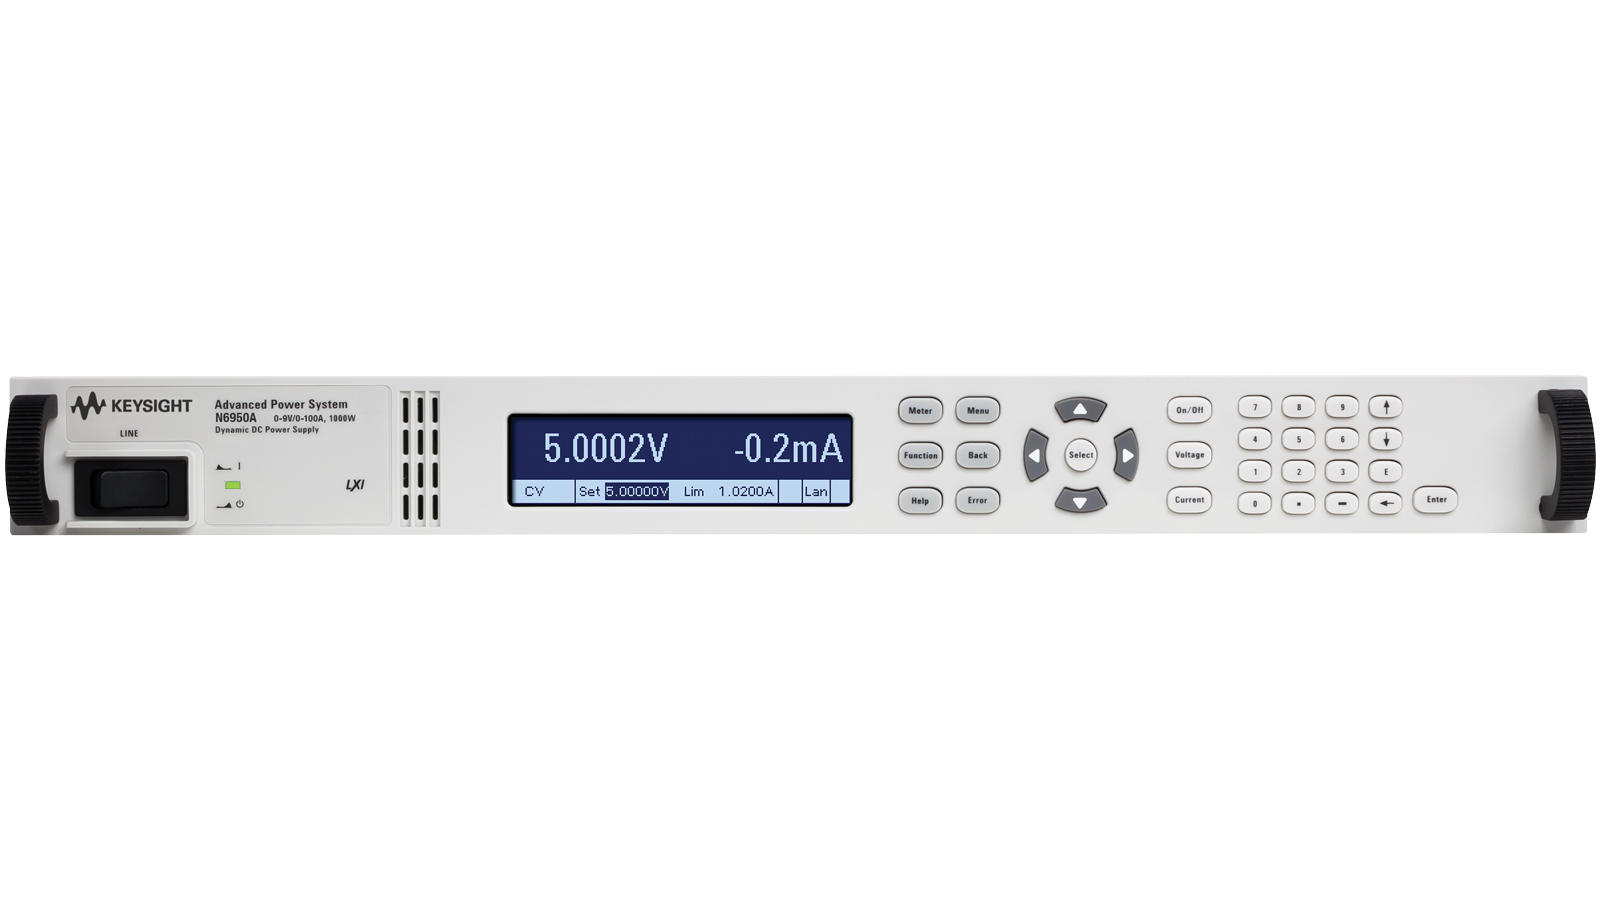 N6900 Series APS, Advance Power System